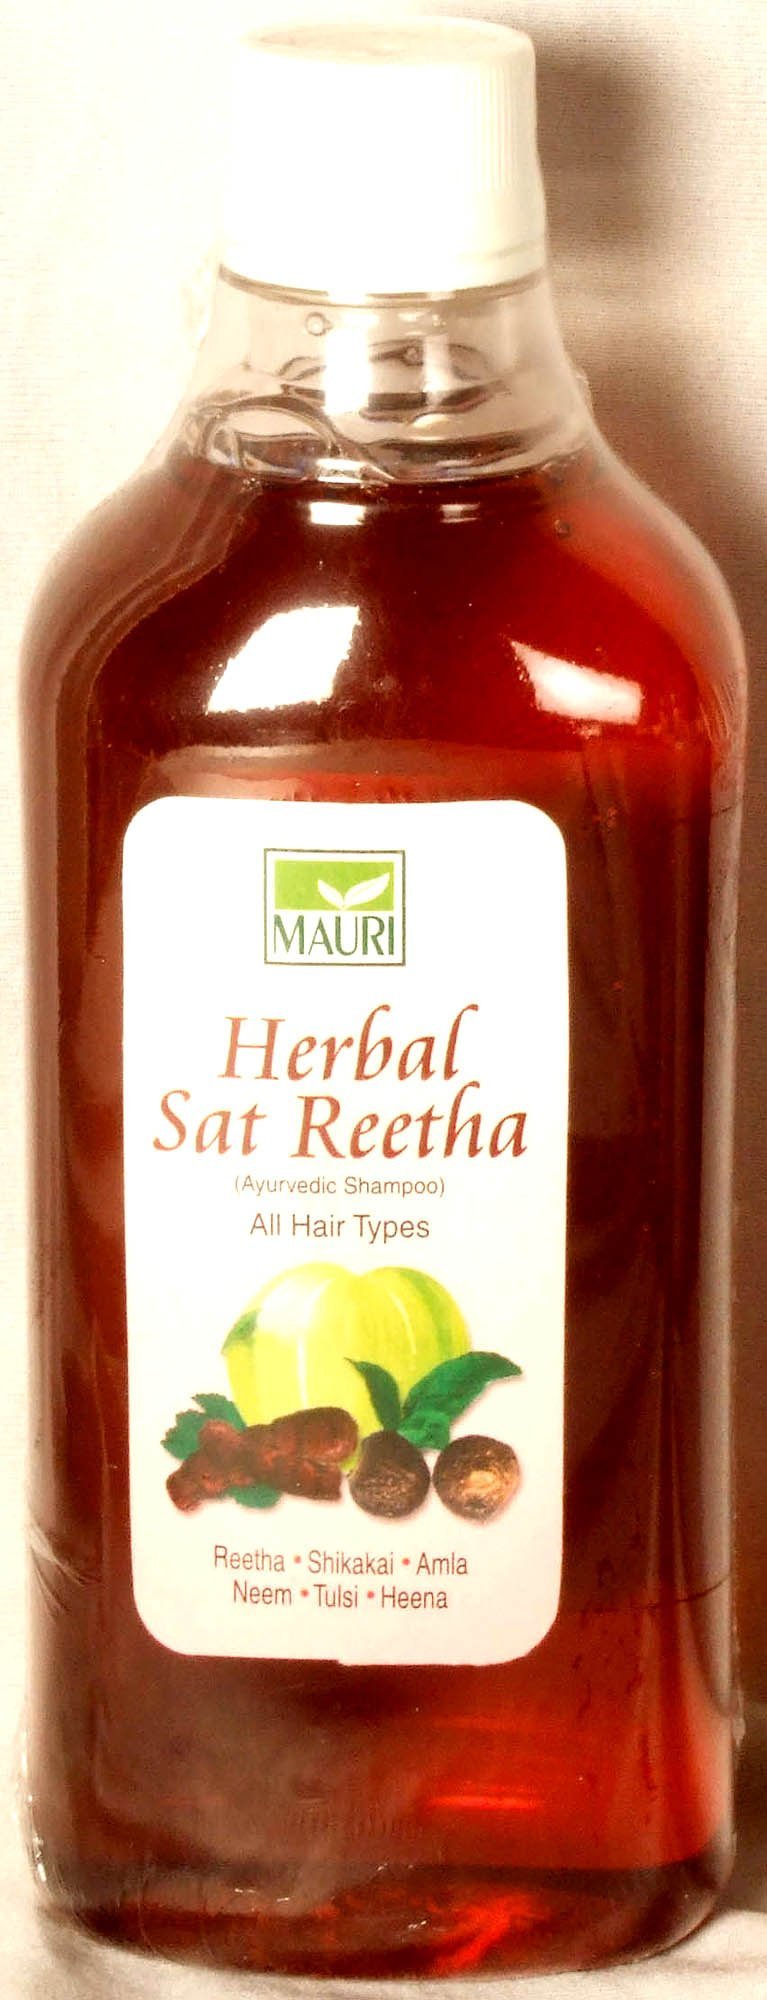 Herbal Sat Reetha (Ayurvedic Shampoo All Hair Types) (Reetha, Shikakai, Amla, Neem, Tulsi, Heena) - book cover